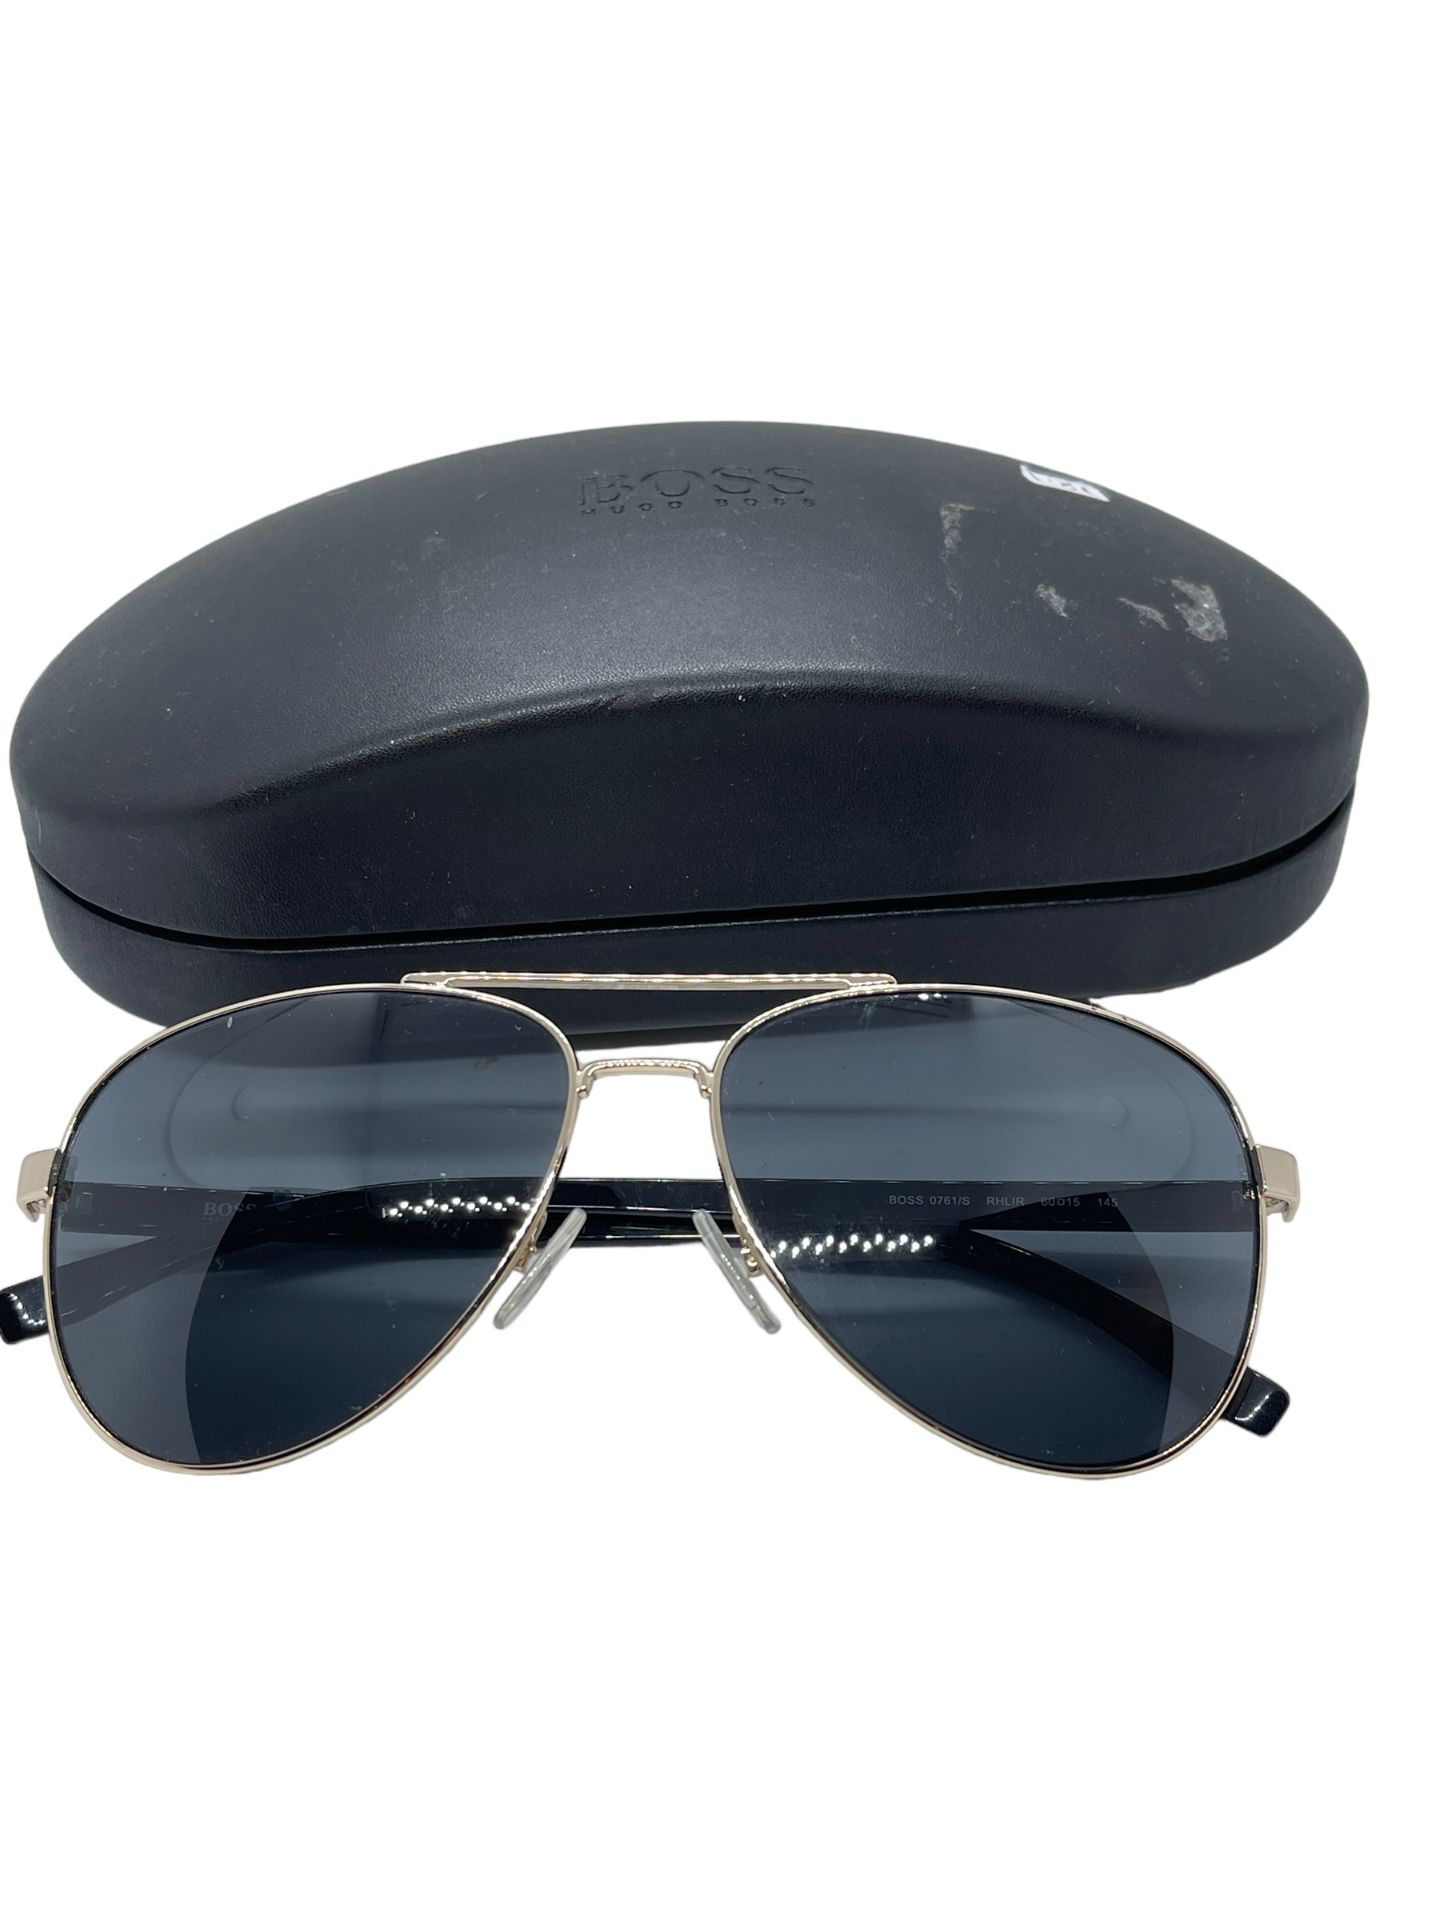 Hugo Boss Sunglasses gold plated aviators with case surplus stock xdemo - Bild 5 aus 6